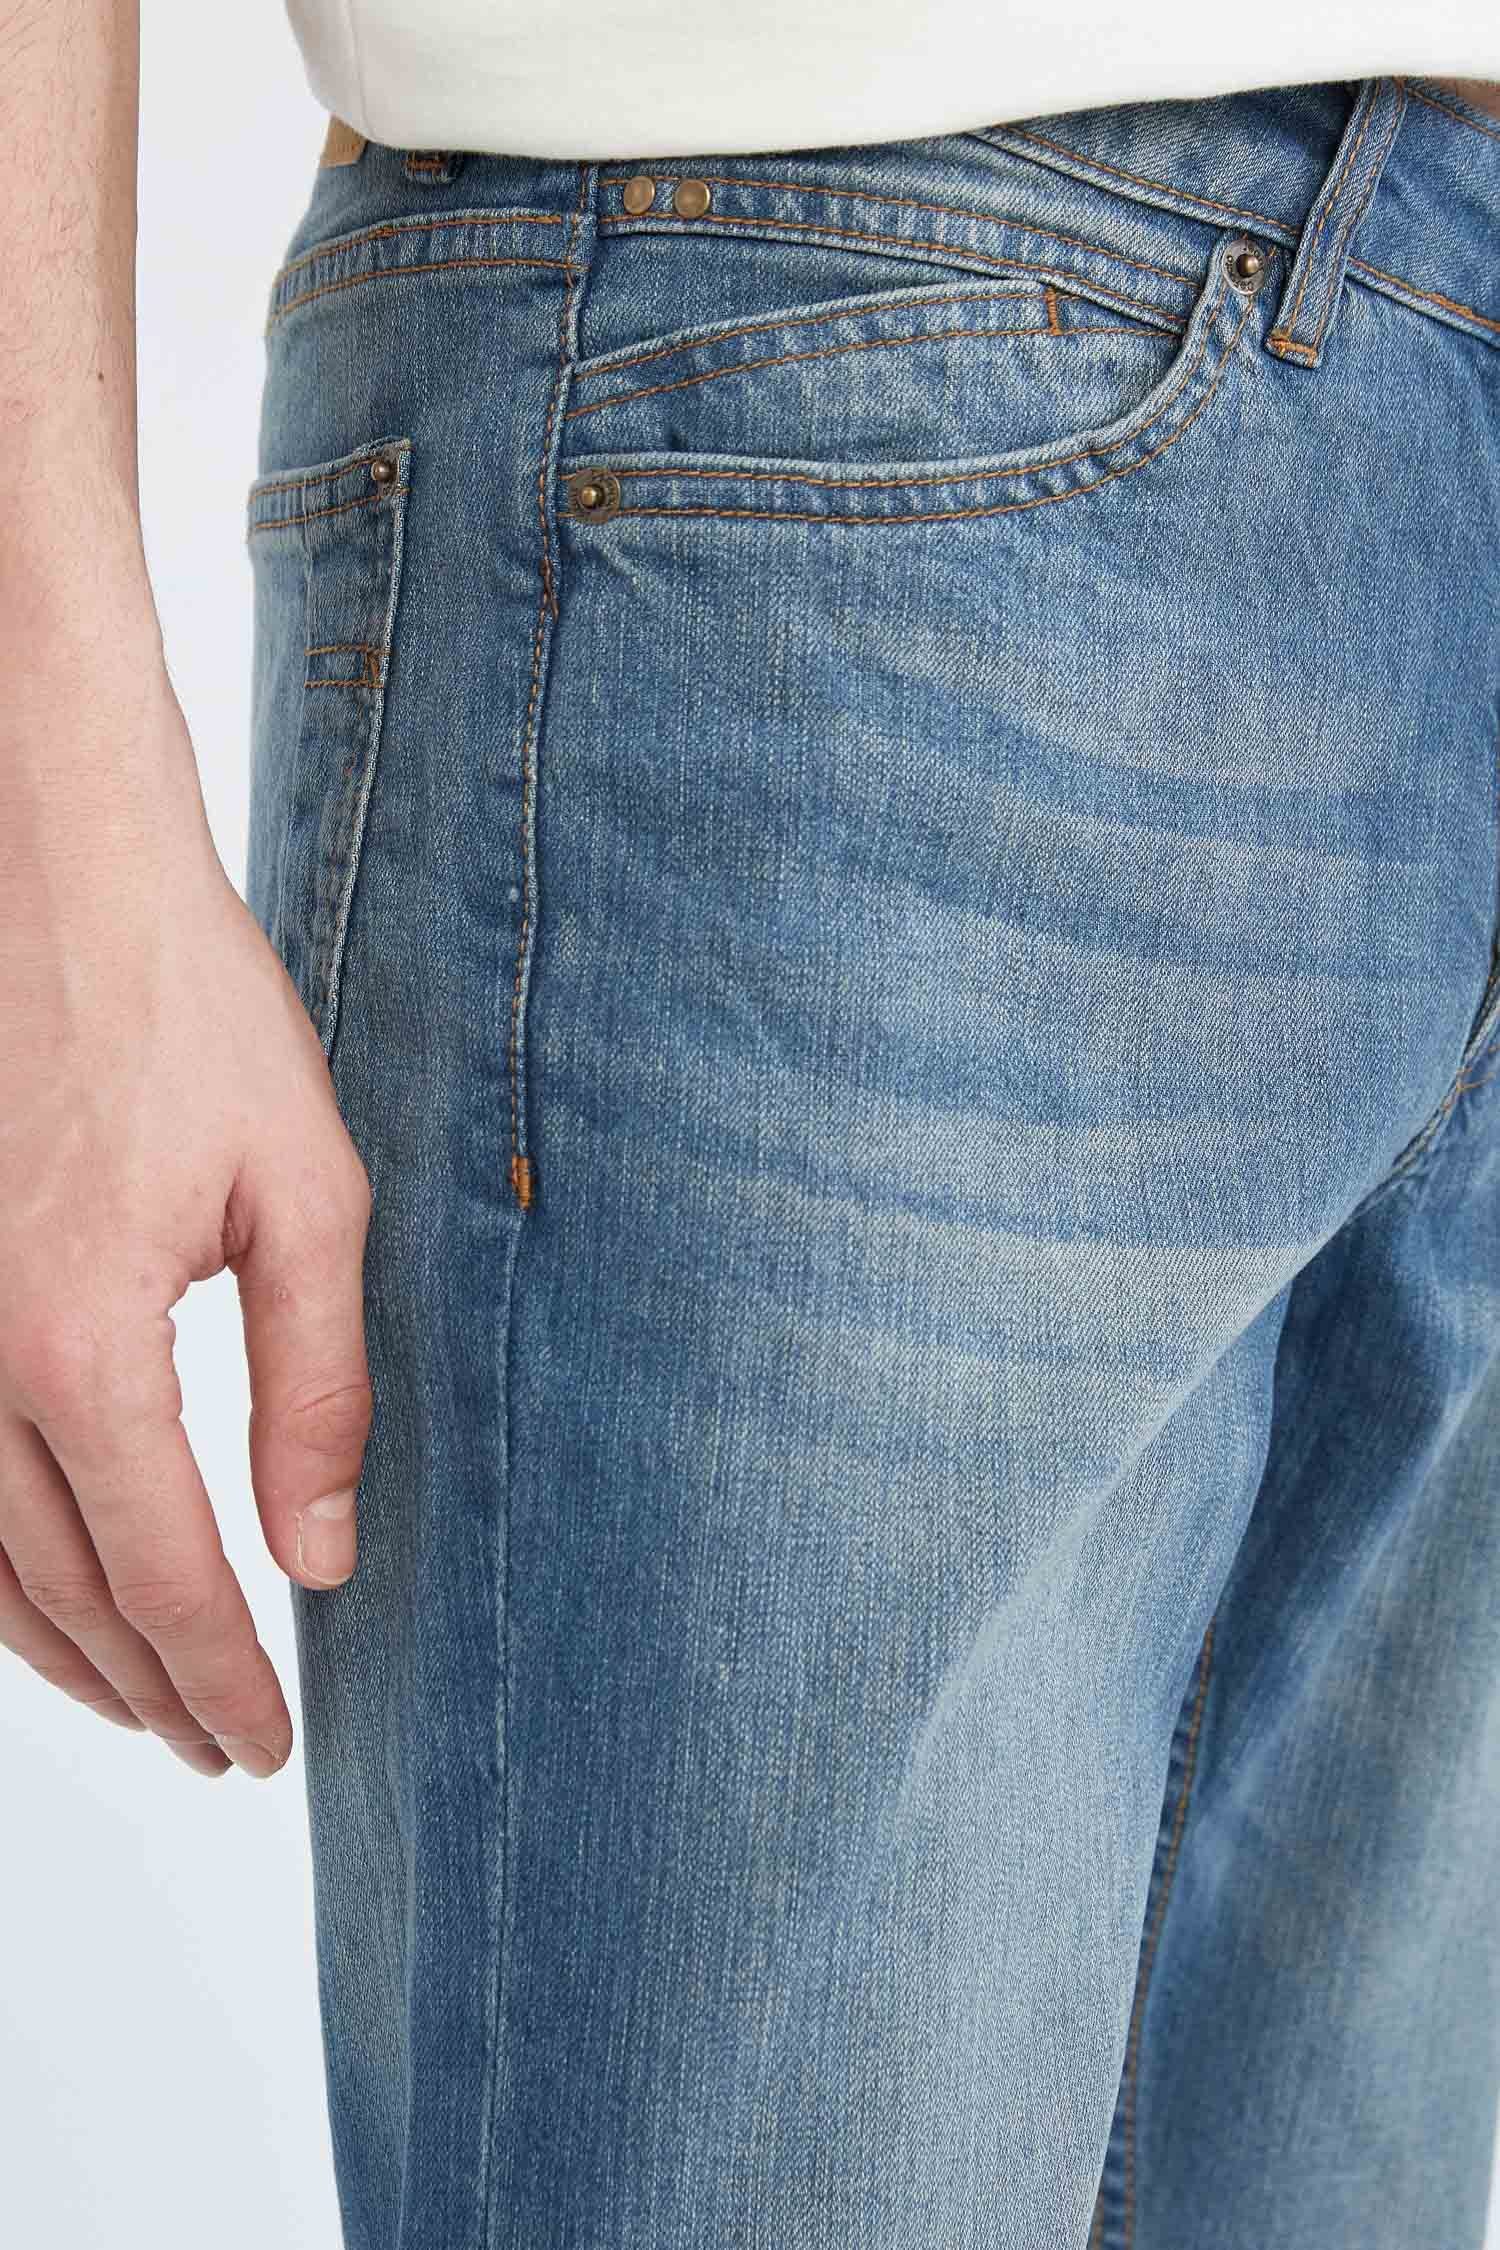 DeFacto Skinny-fit-Jeans Herren FIT SKINNY DENIM Skinny-fit-Jeans SUPER